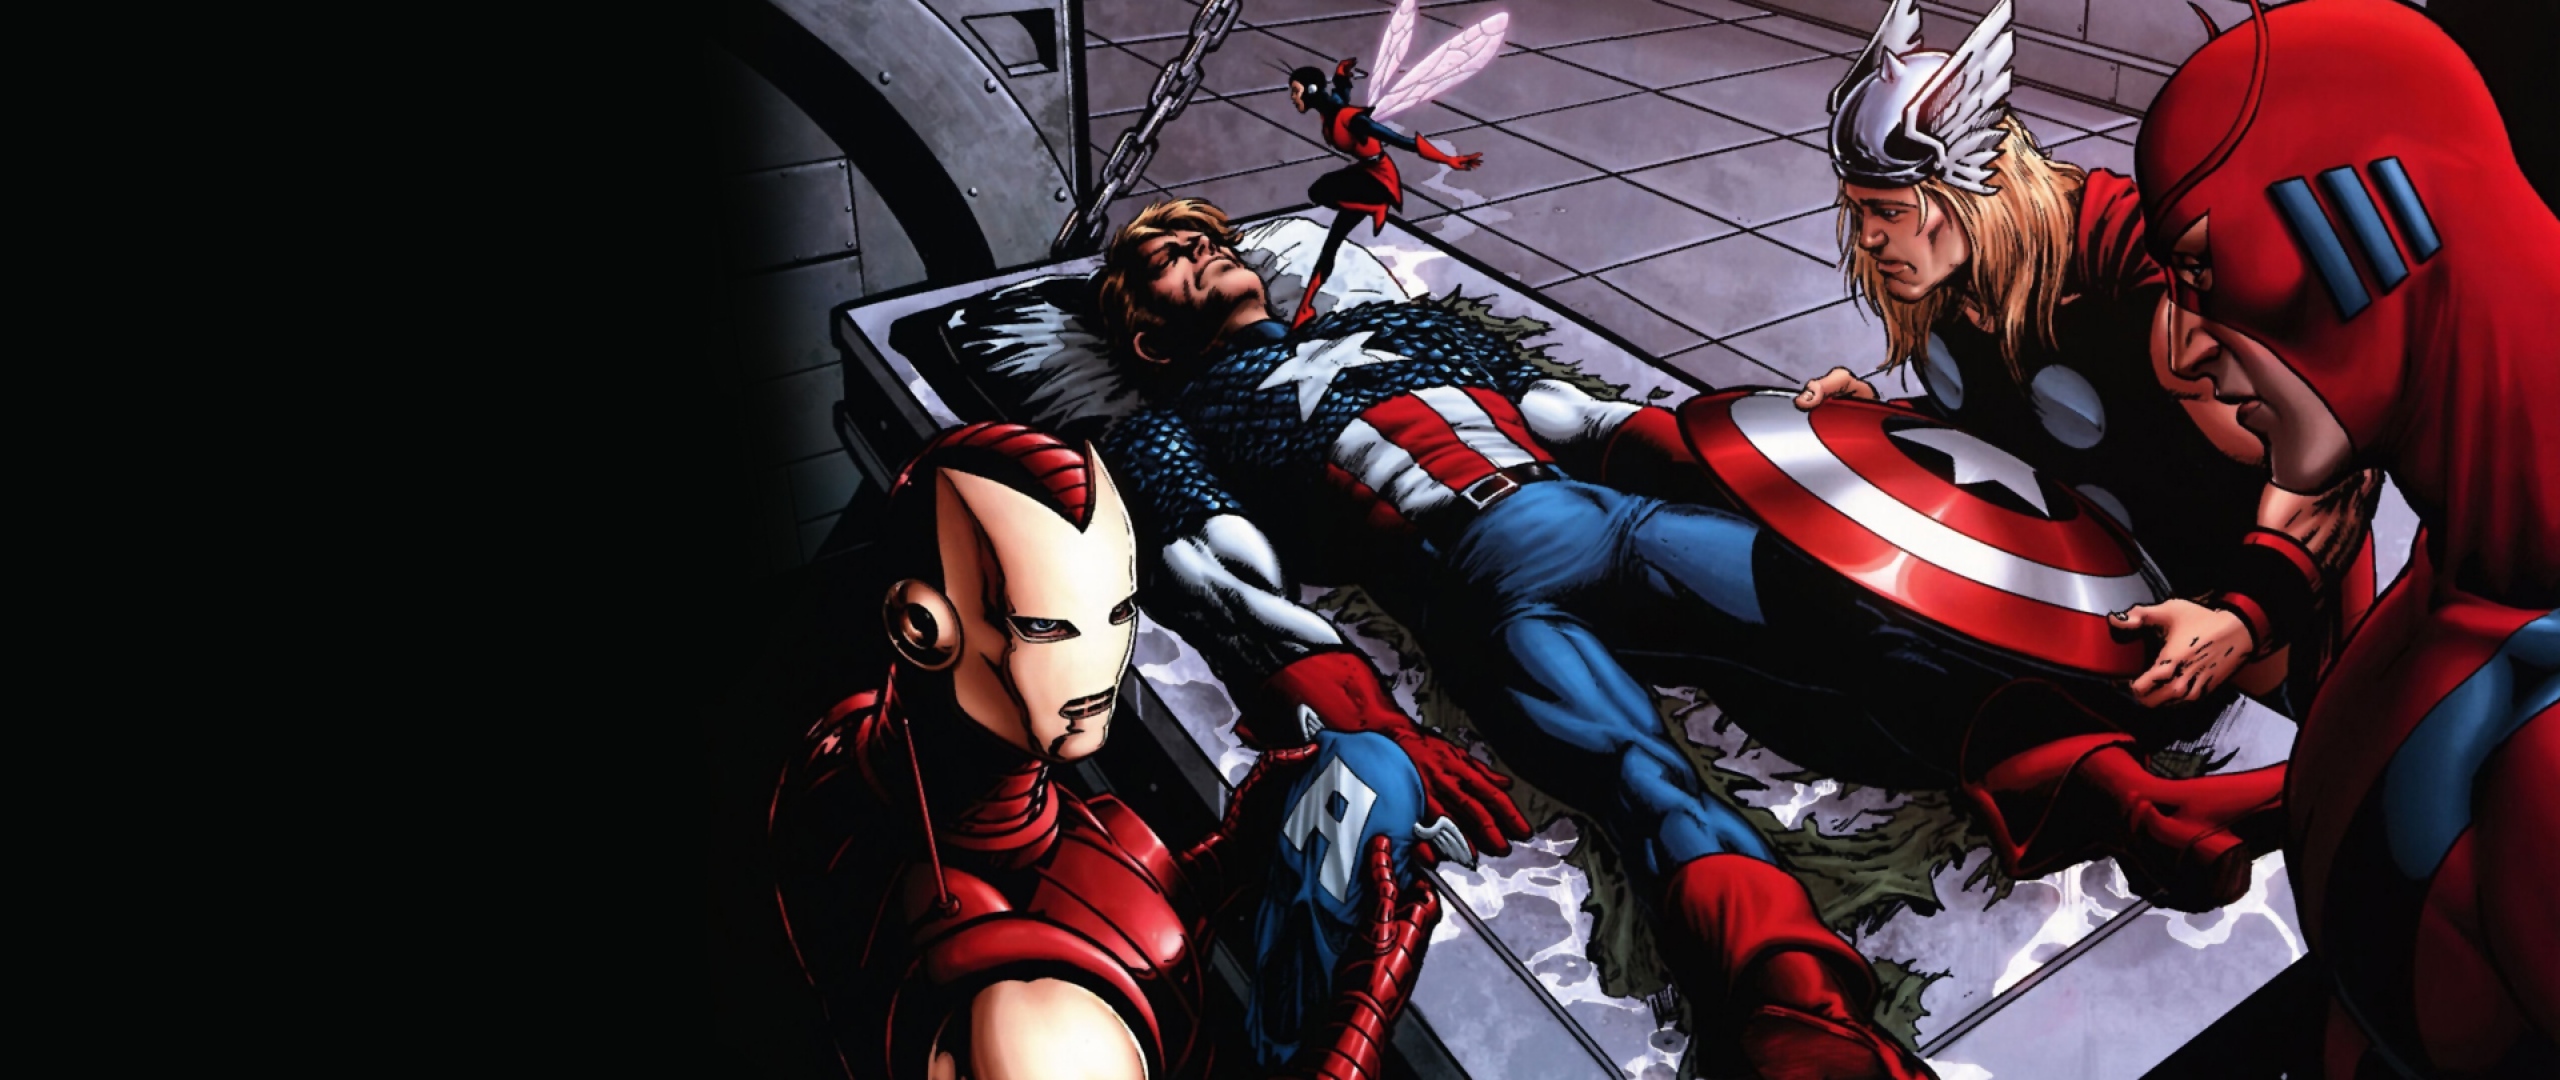 Download Wallpaper 2560x1080 Iron man, Iron patriot, Marvel comics ...